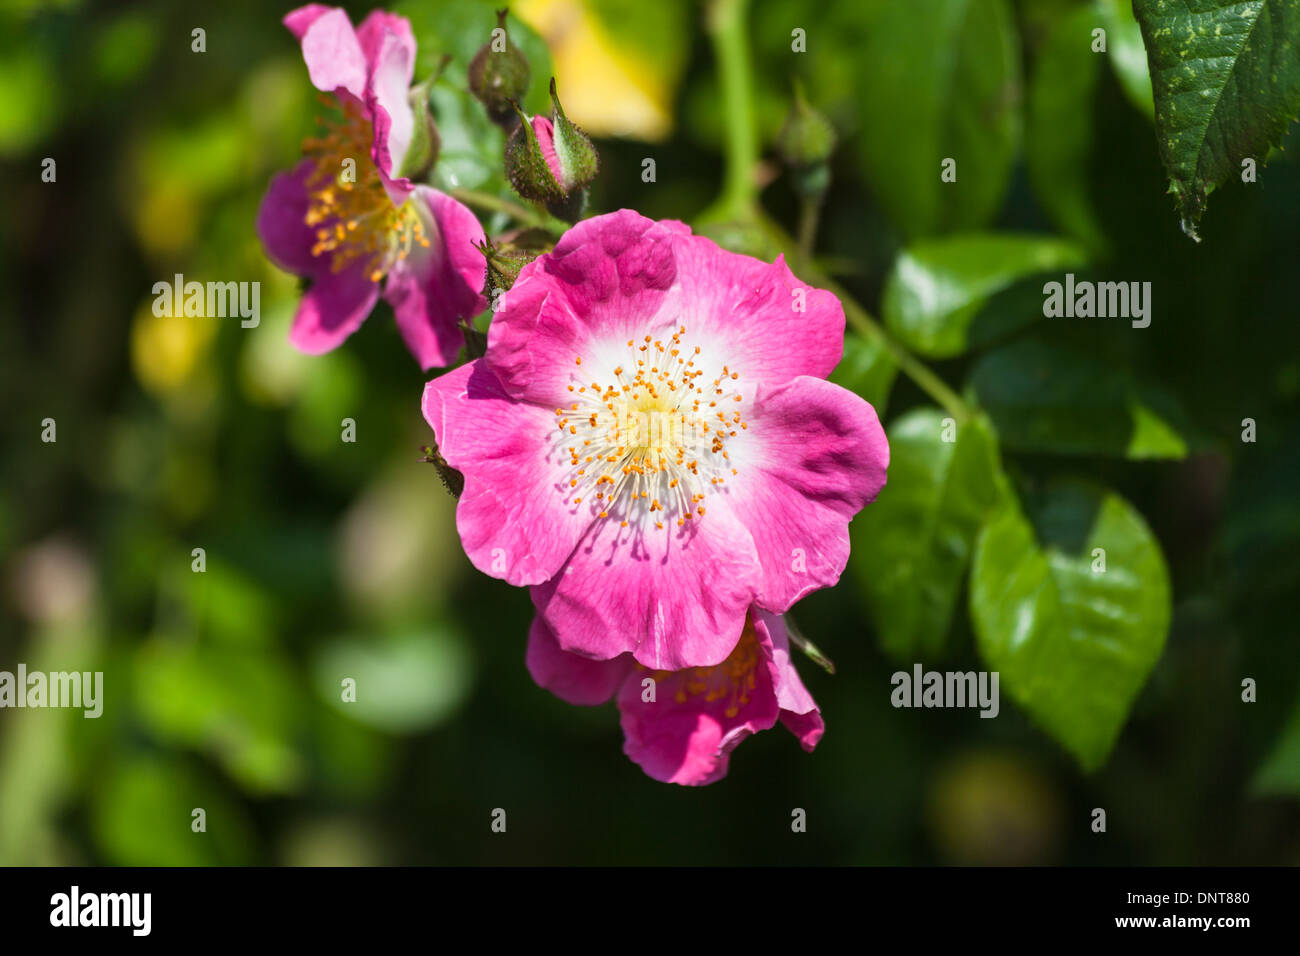 Carmine-pink rose 'American Pillar' Stock Photo - Alamy